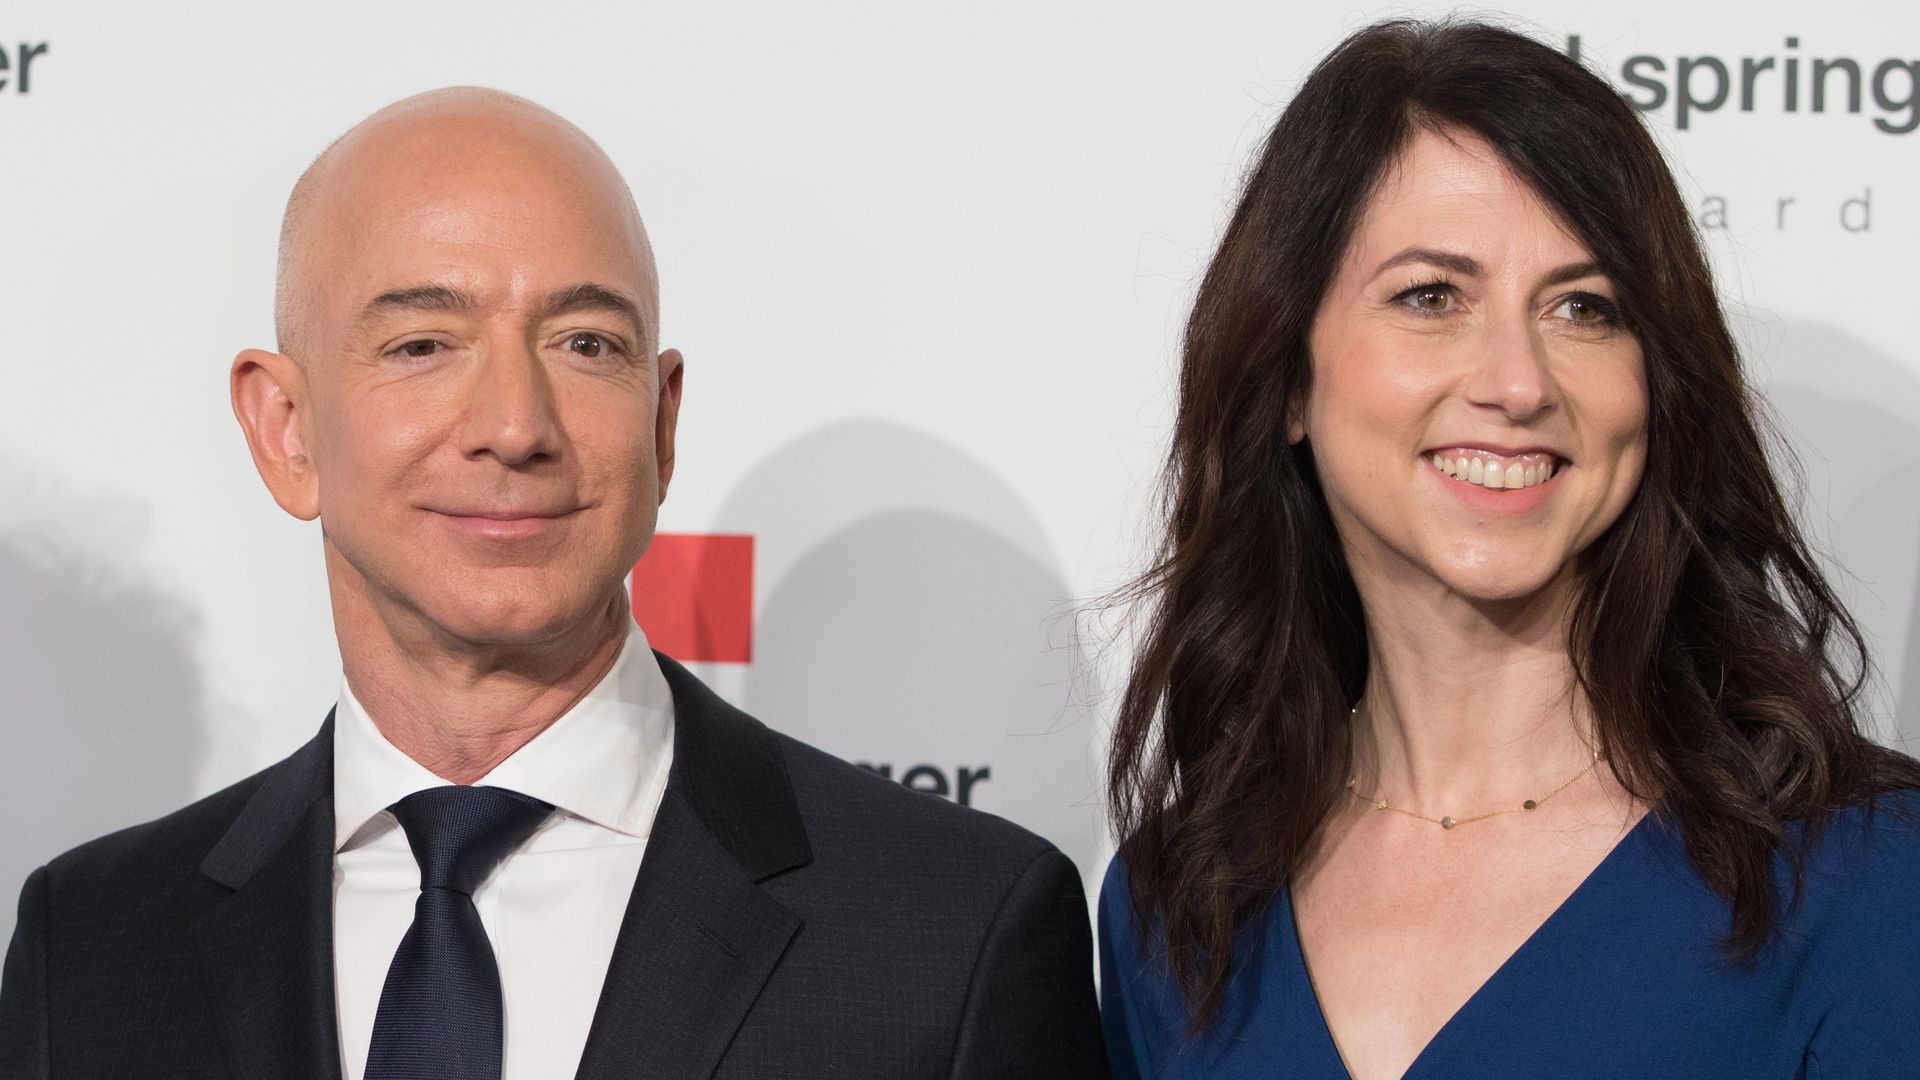 Amazon Jeff Bezos and his wife MacKenzie Bezos